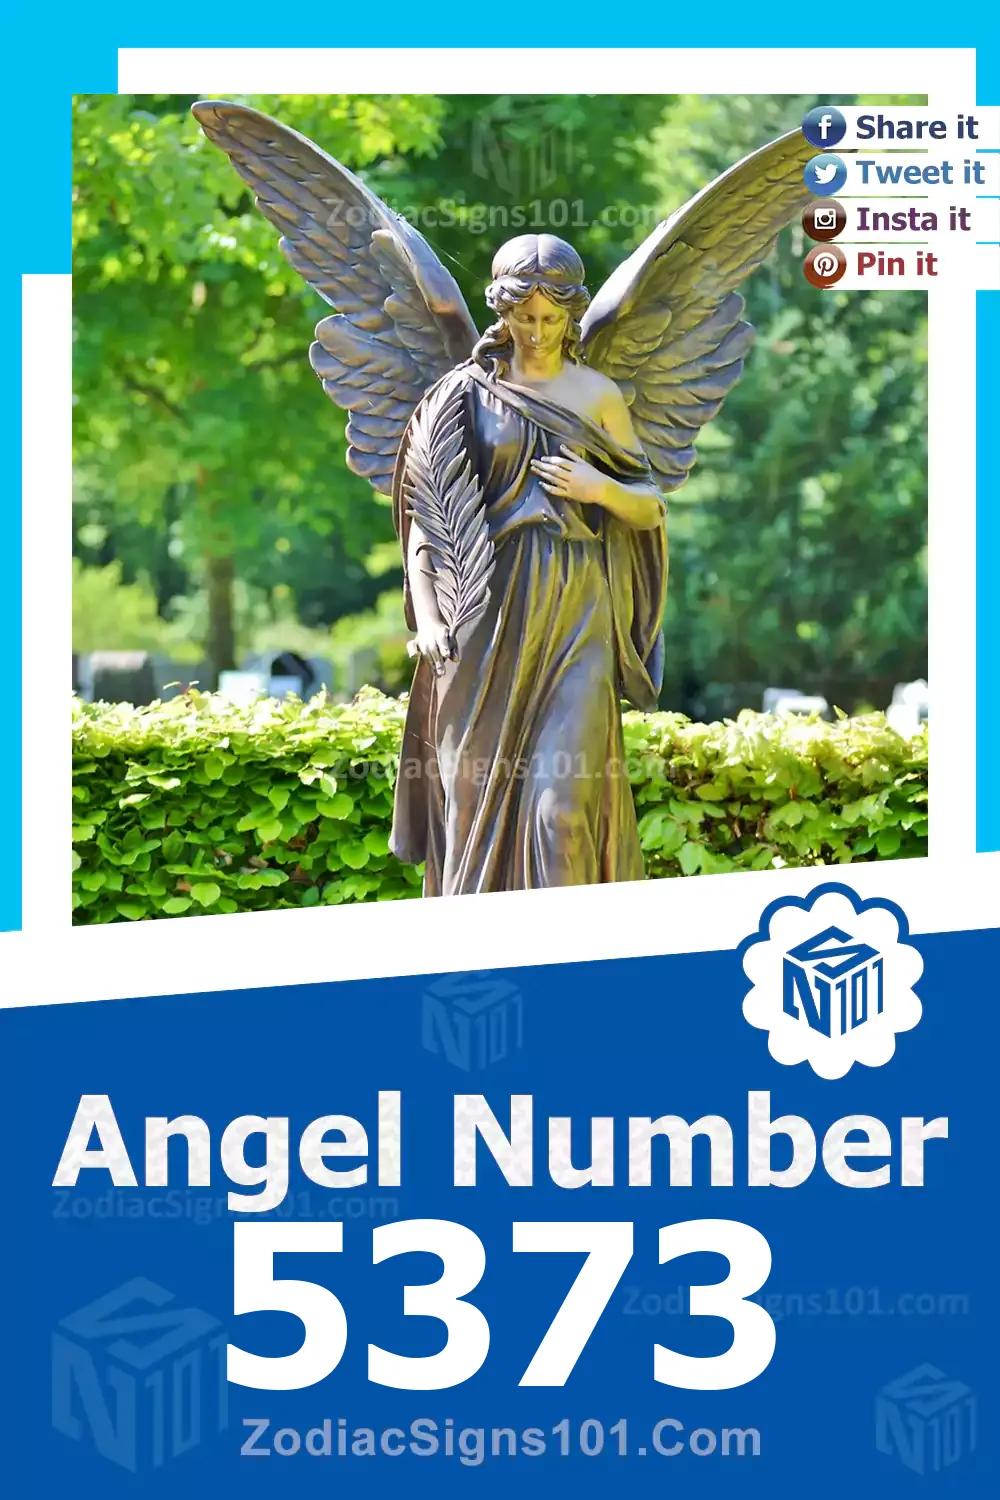 5373-Angel-Number-Meaning.jpg